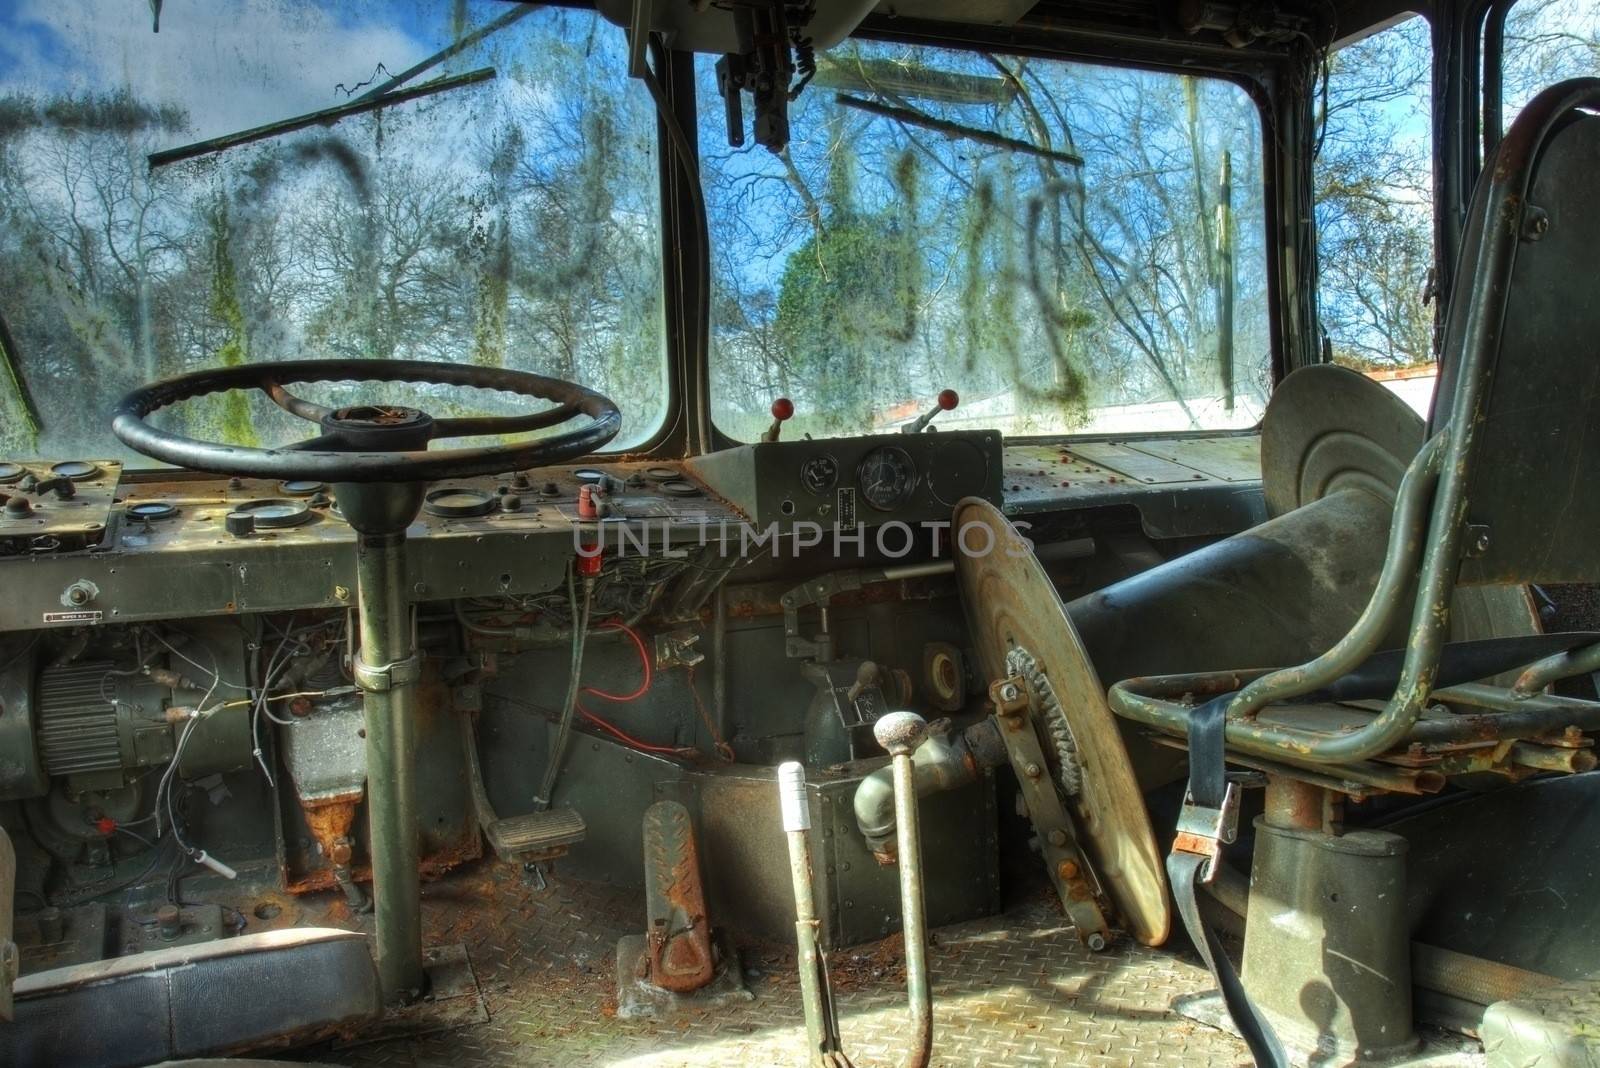 Old military vehicle interior at scrapyard, England.